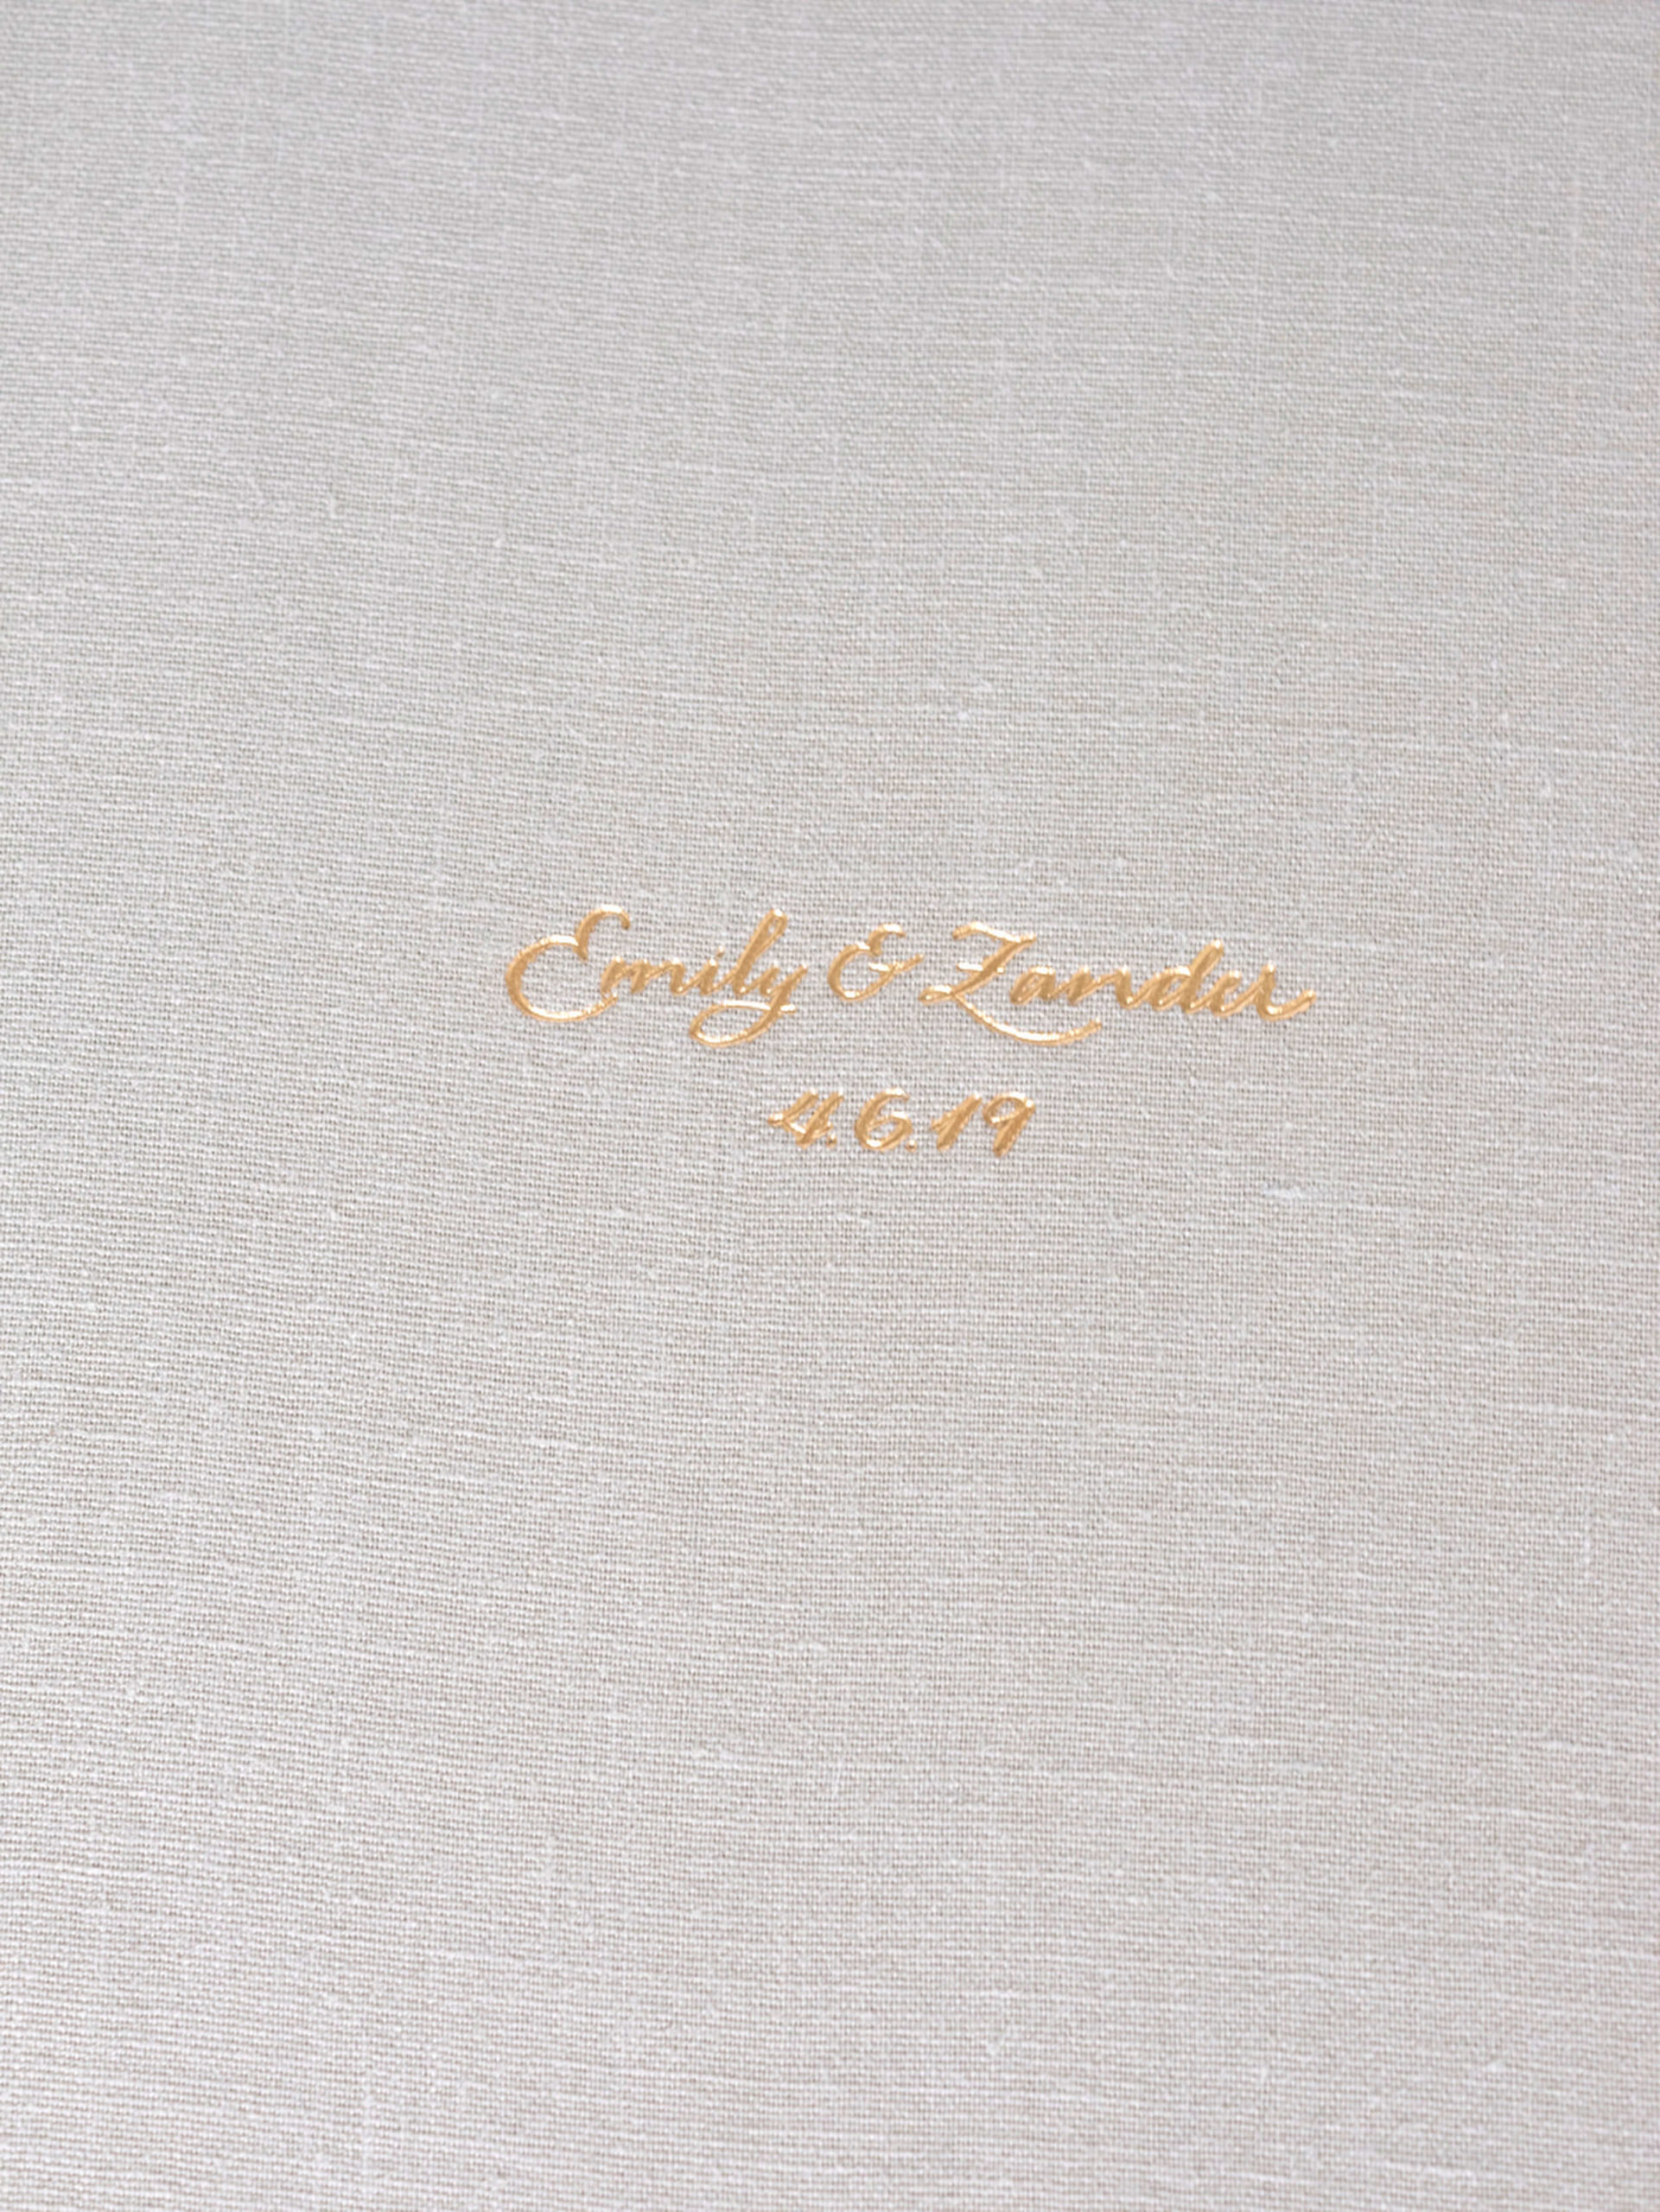 gold foil imprinting on wedding album cover